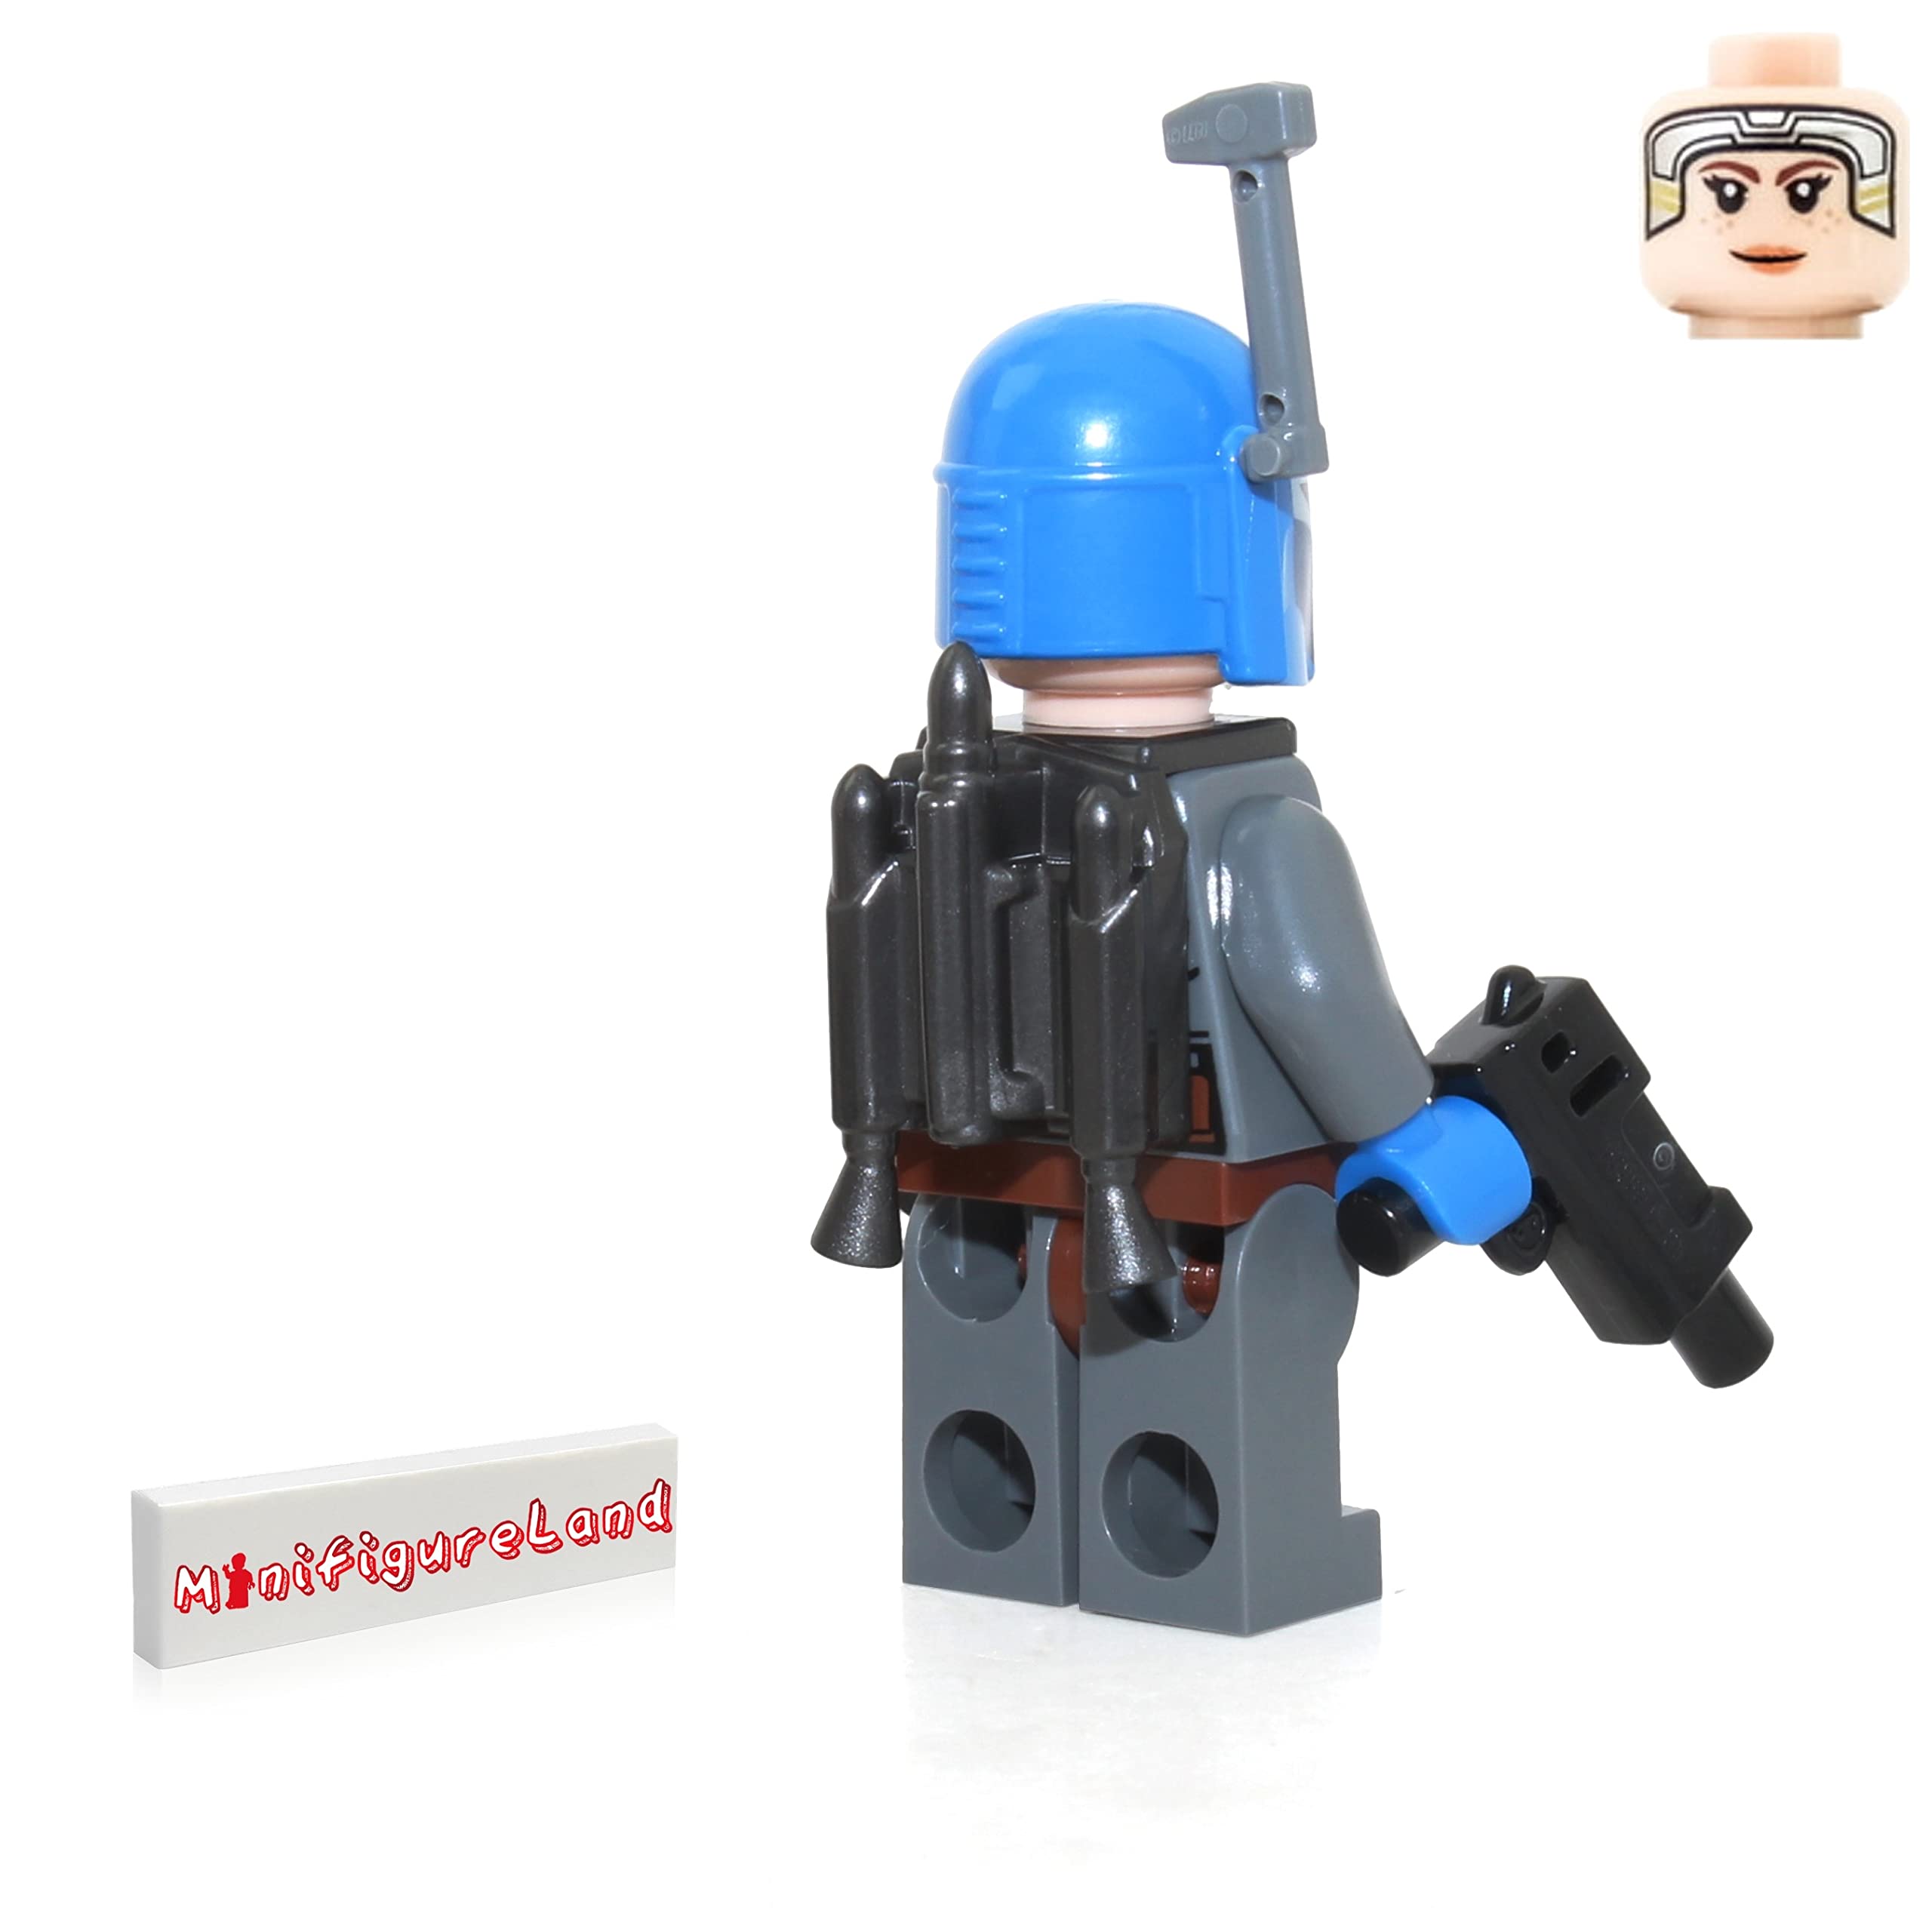 LEGO Star Wars The Mandalorian Minifigure - Bo-Katan Kryze with Jetpack and Weapons 75316